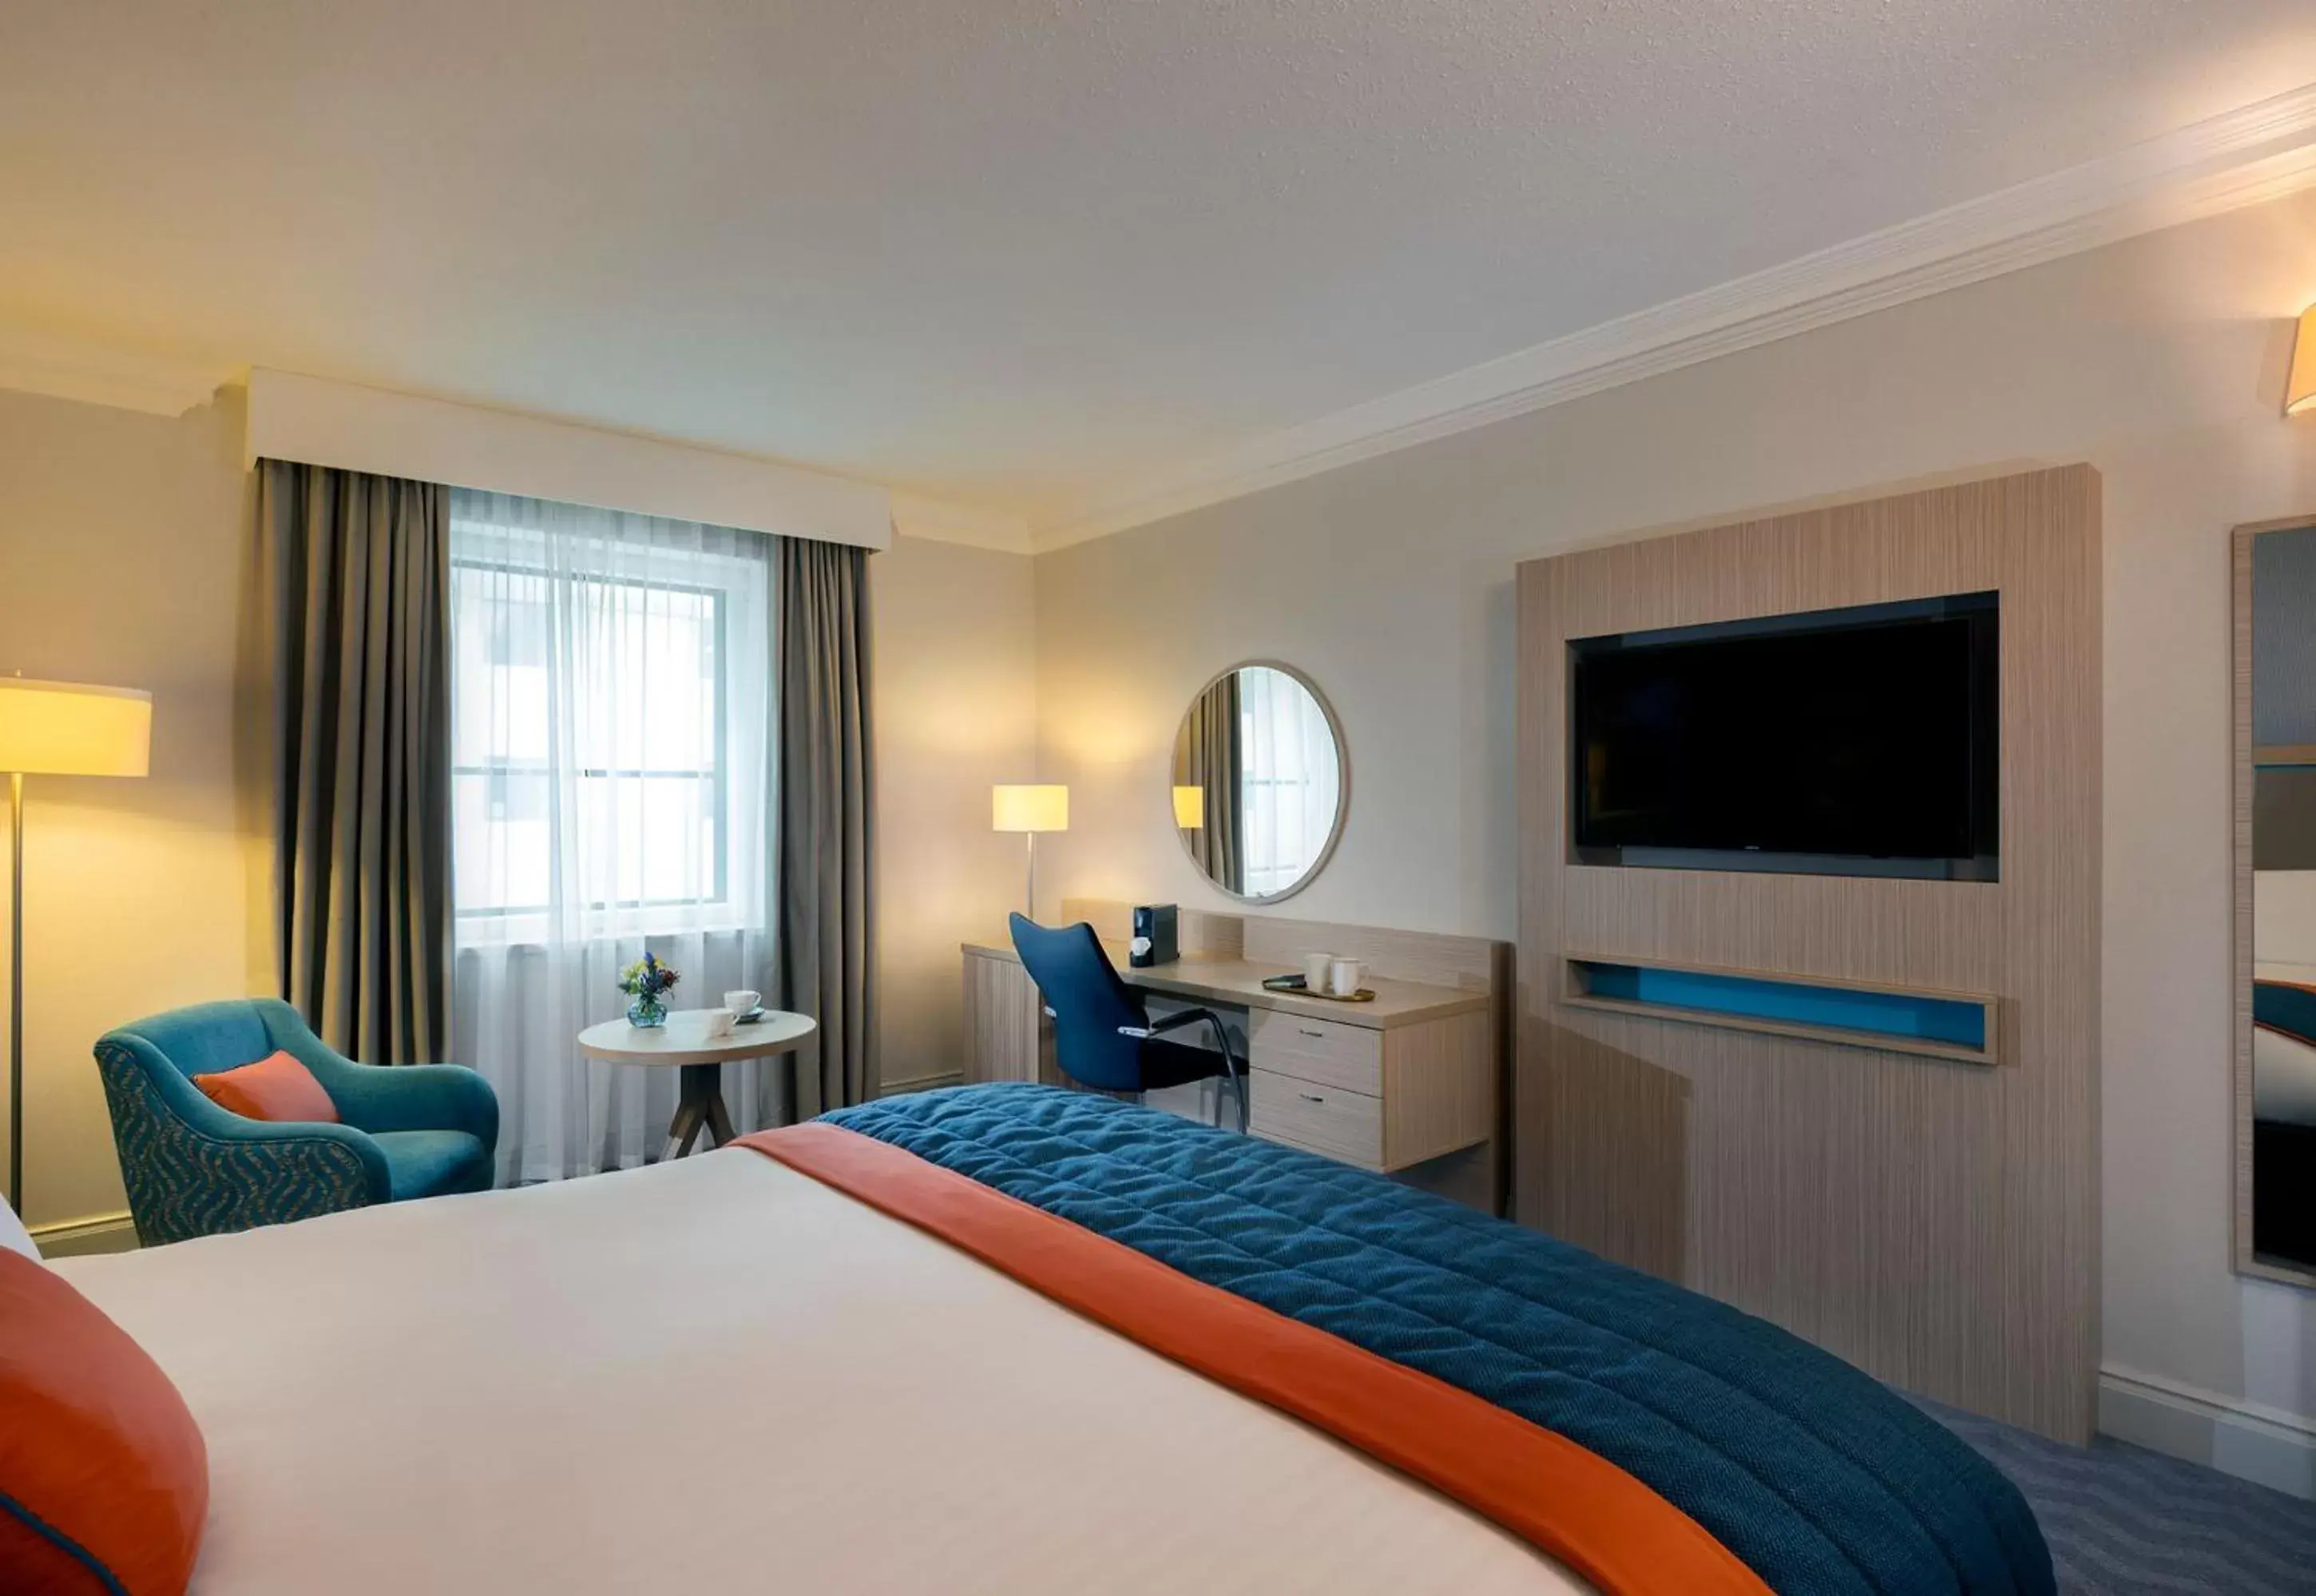 Bedroom, Bed in Leonardo Royal Hotel Brighton Waterfront - Formerly Jurys Inn